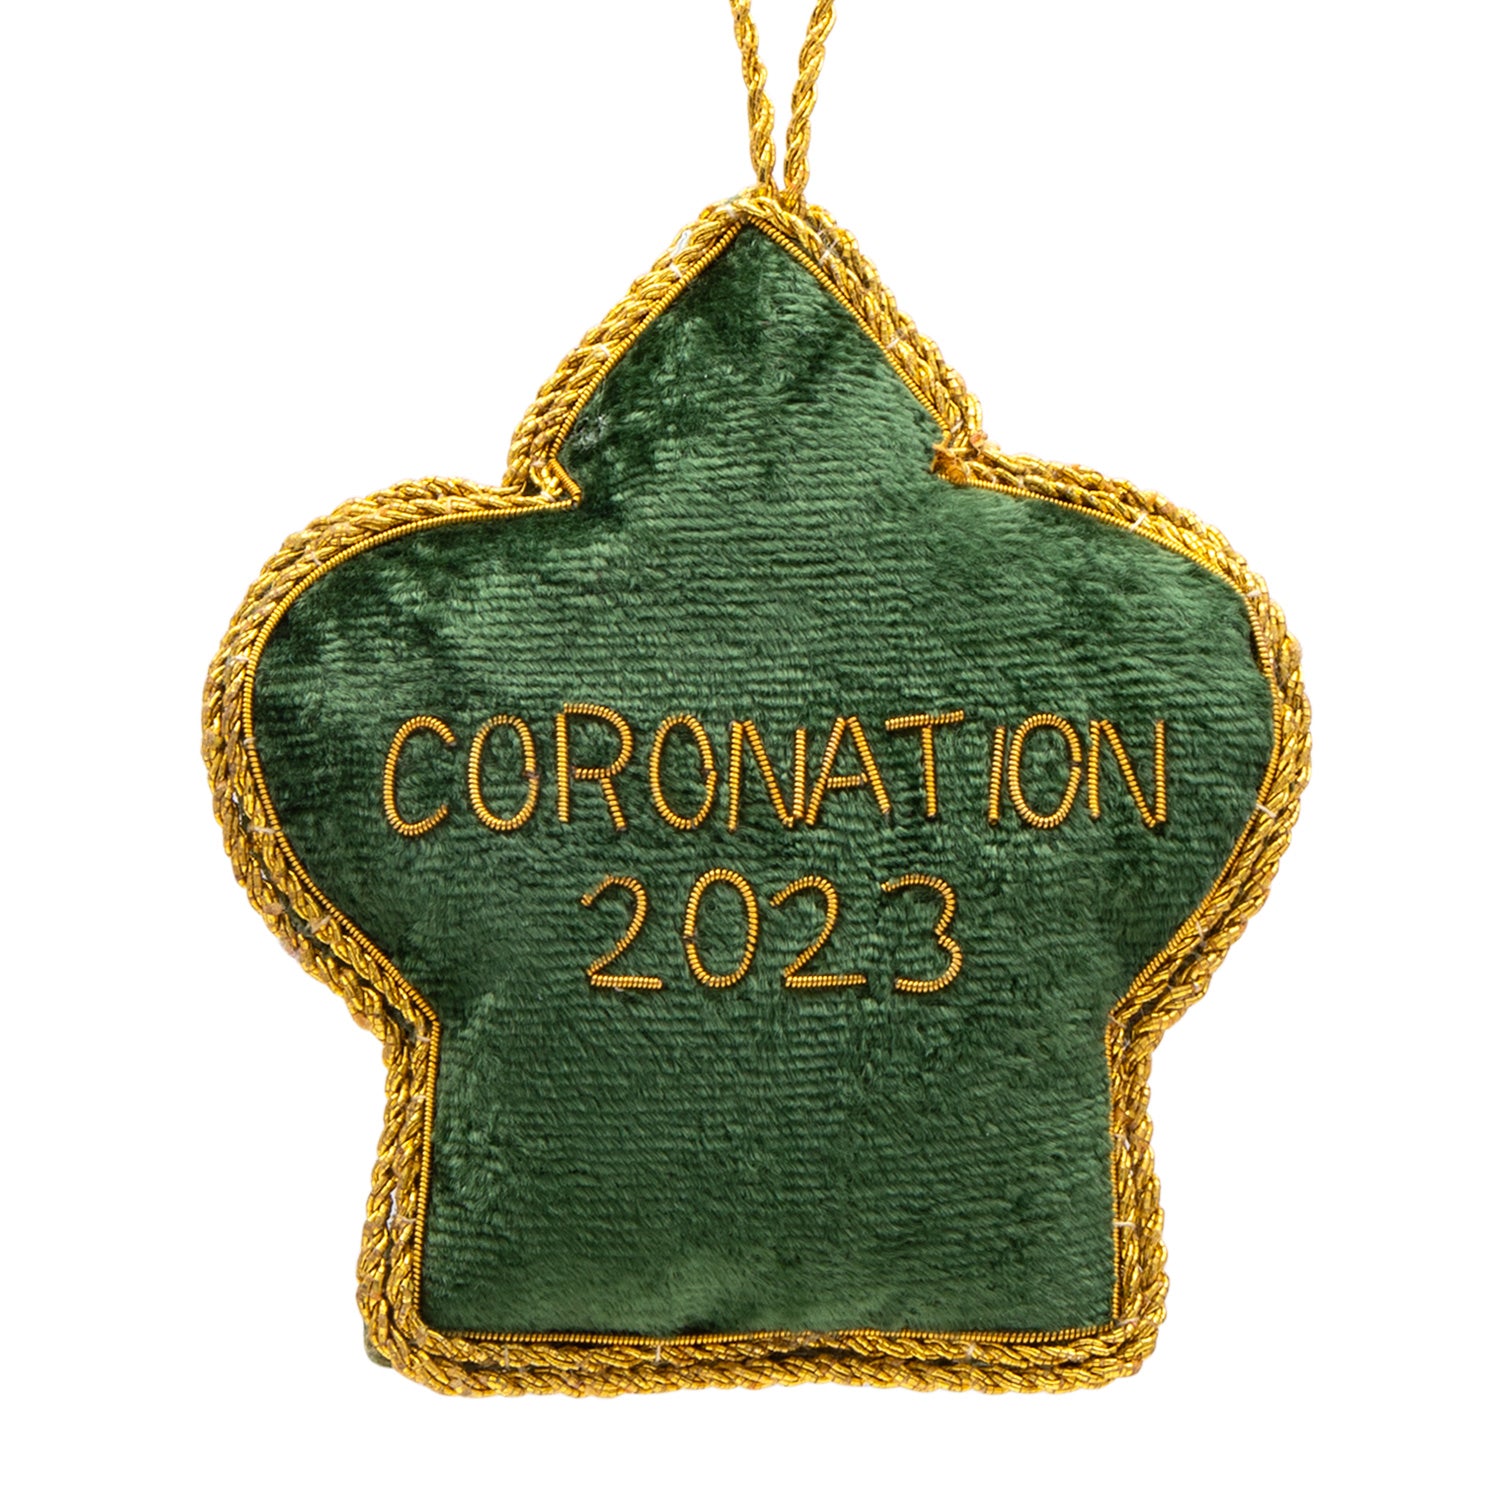 King Charles III Coronation 2023 Stitched Decoration 2